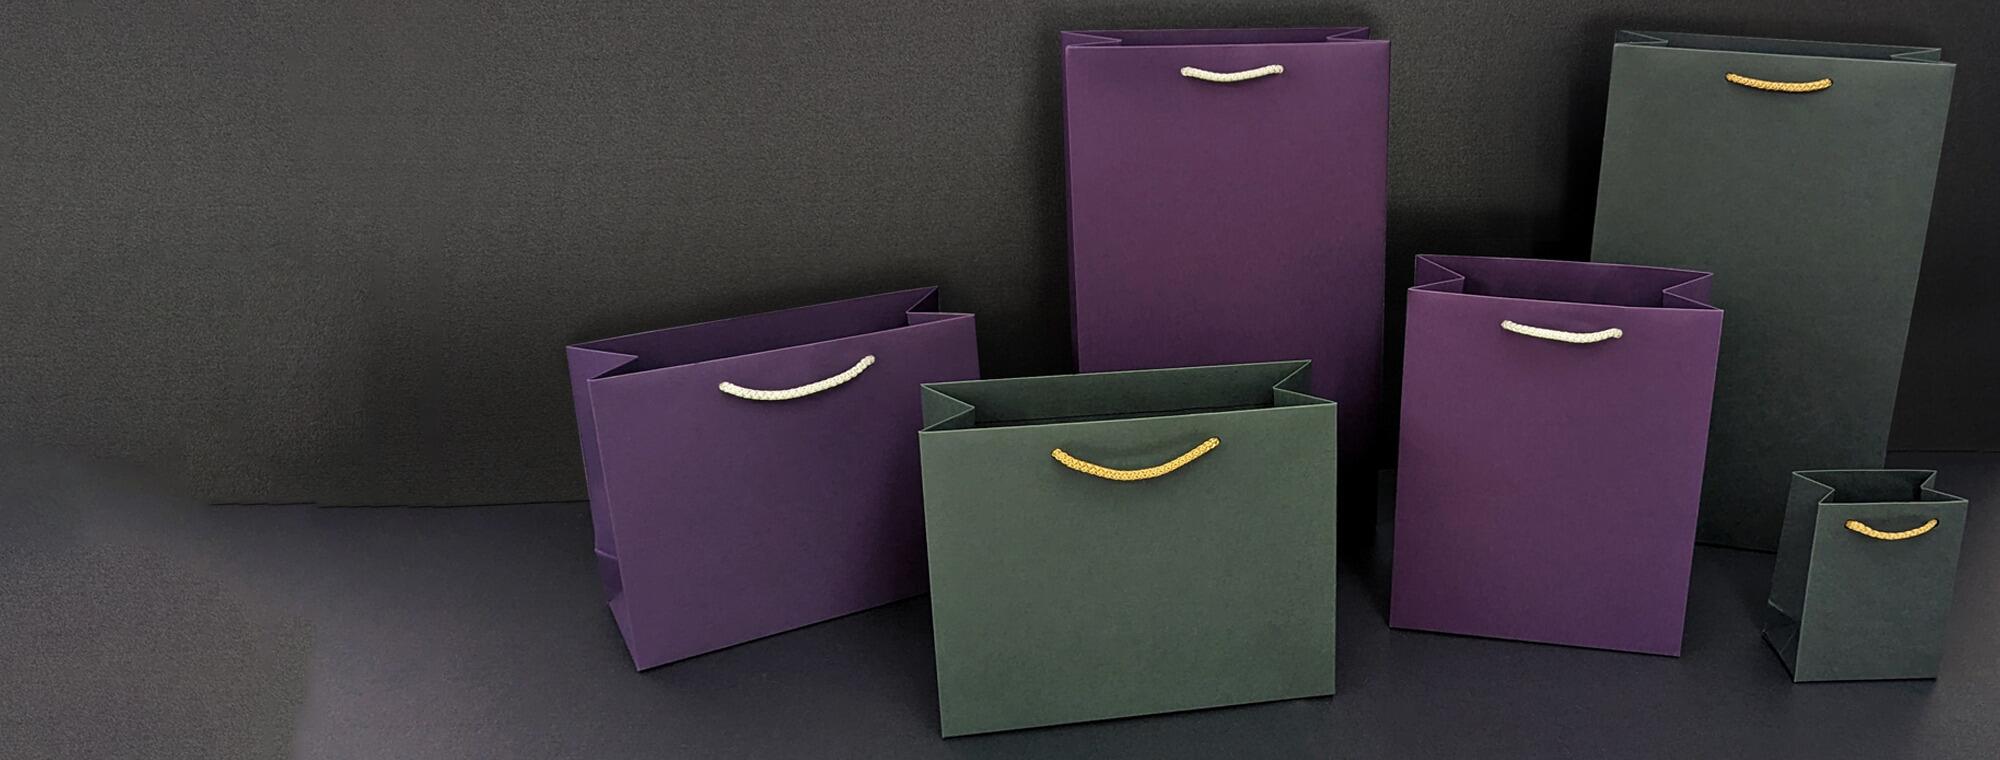 <h2>LUXURY MATT GIFT BAGS</h2><p>Our new Luxury Matt Gift Bags